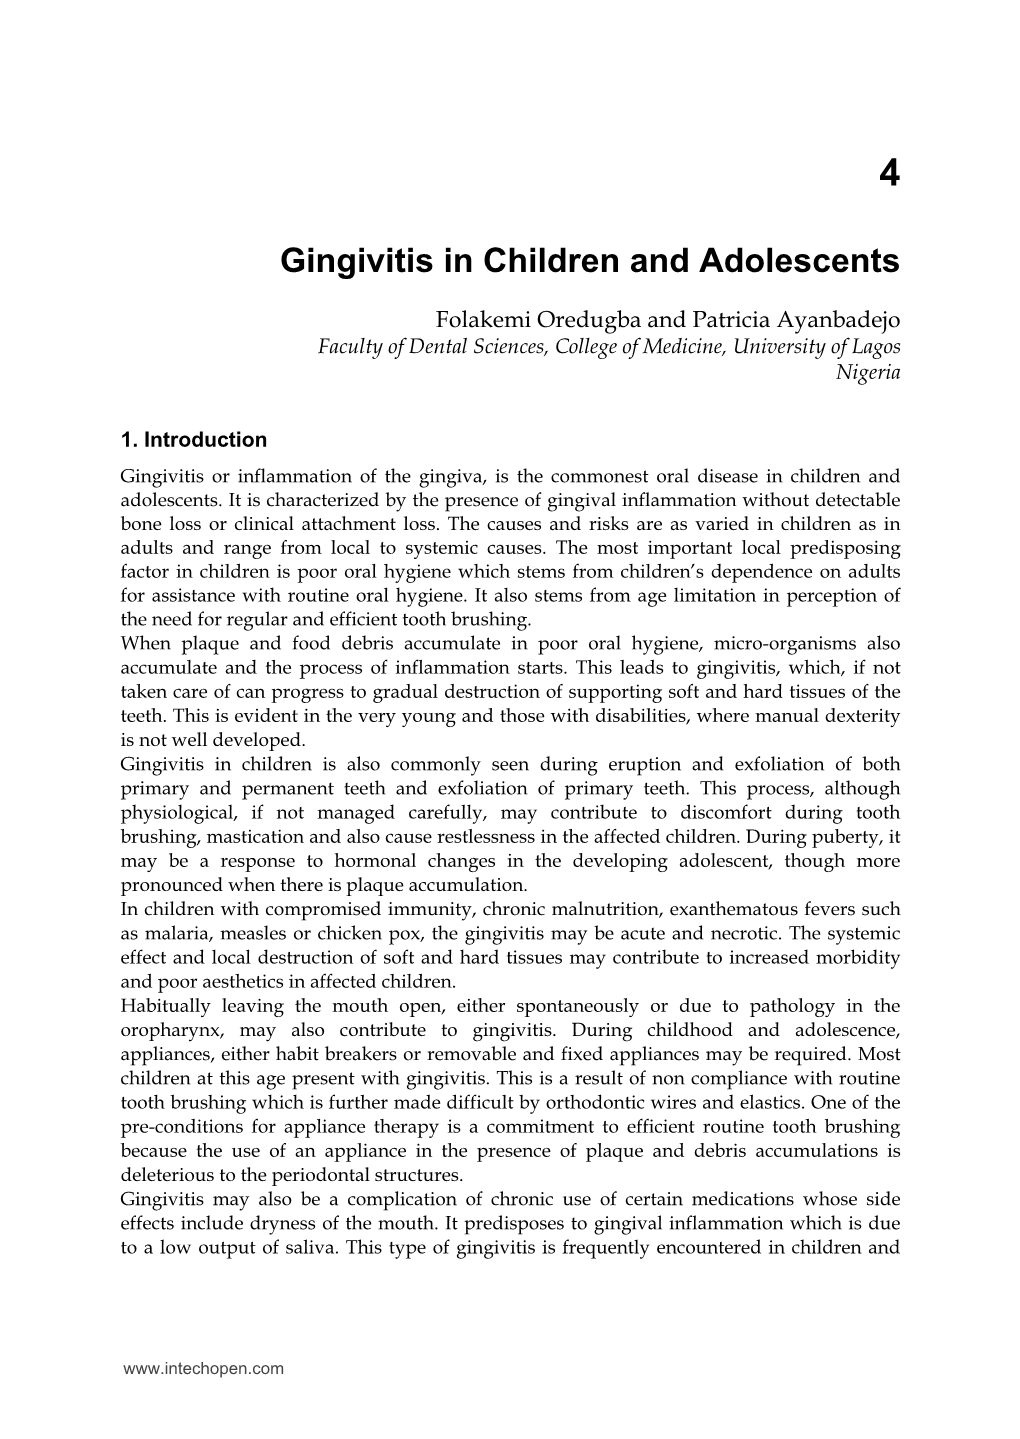 Gingivitis in Children and Adolescents